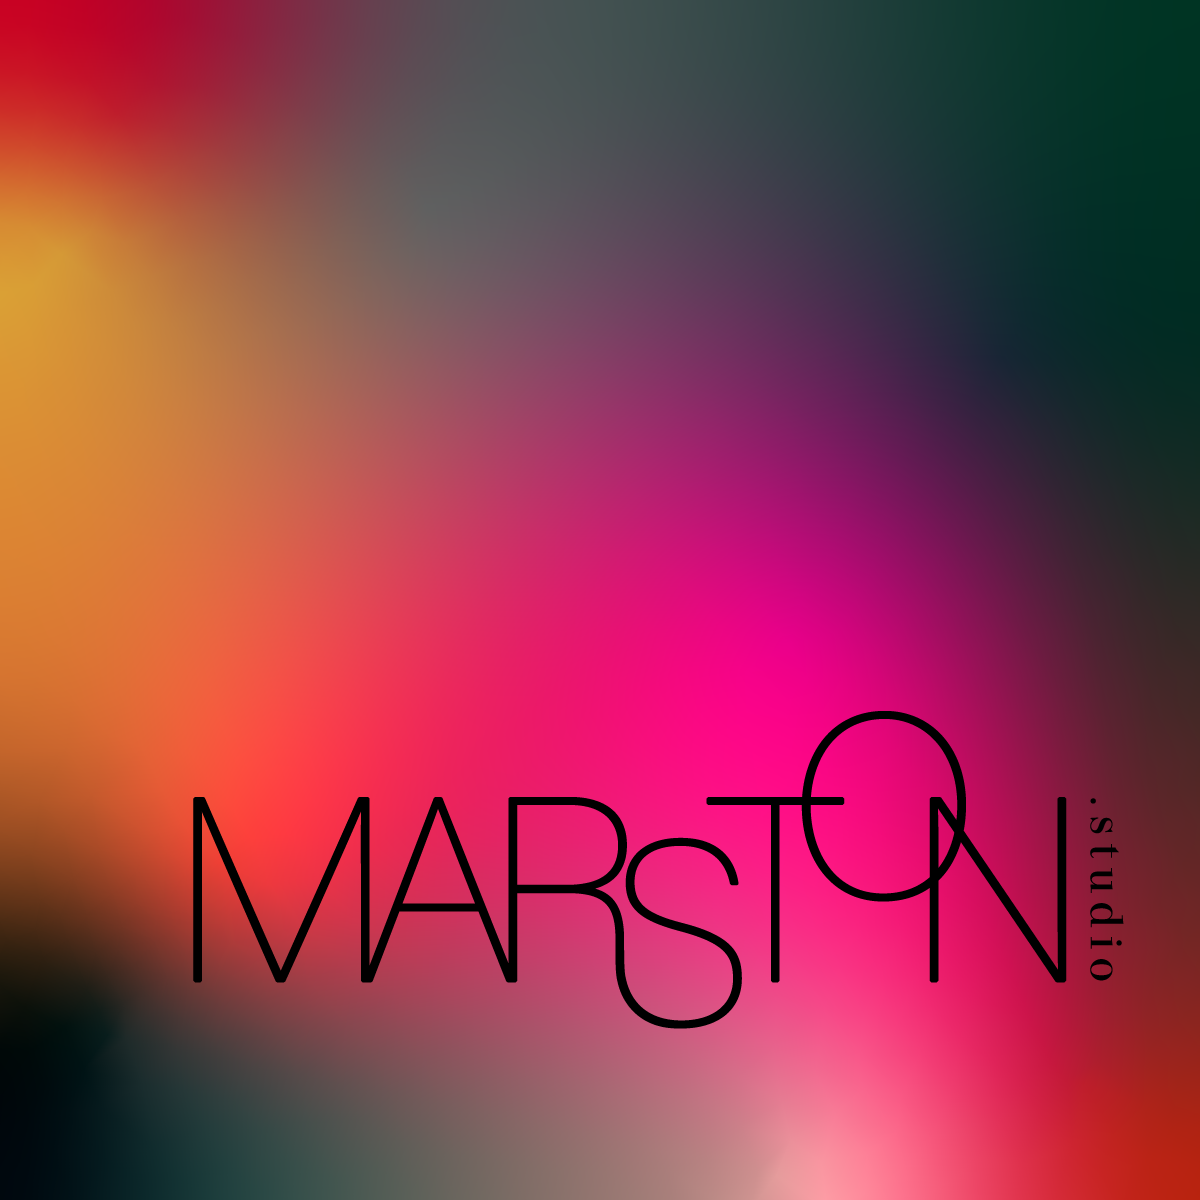 Marston Studio Logo